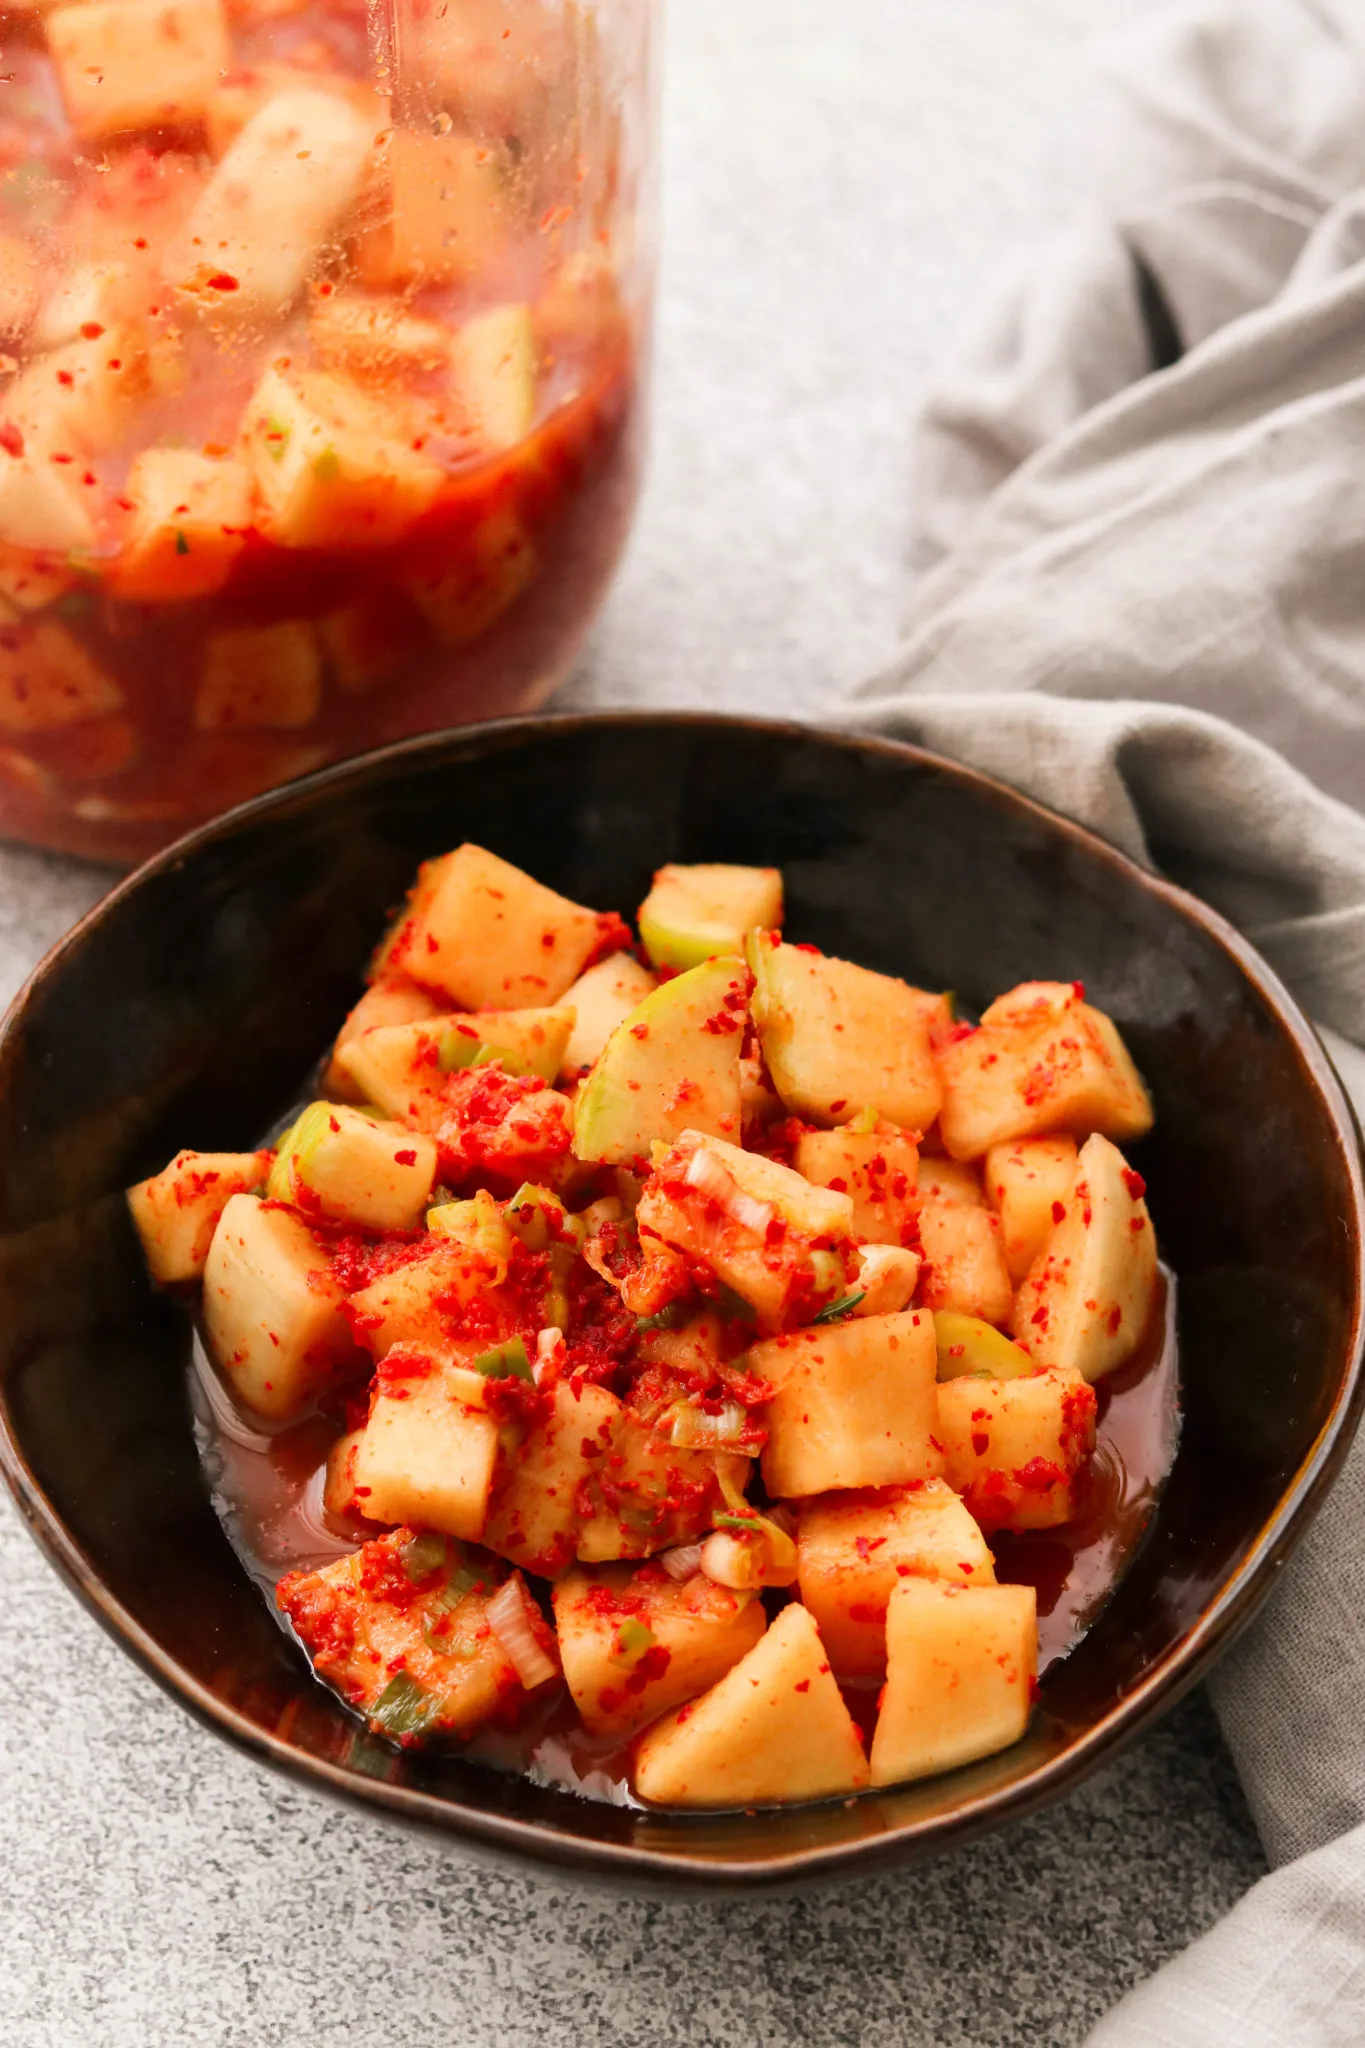 Kkakddugi - Korean Kimchi